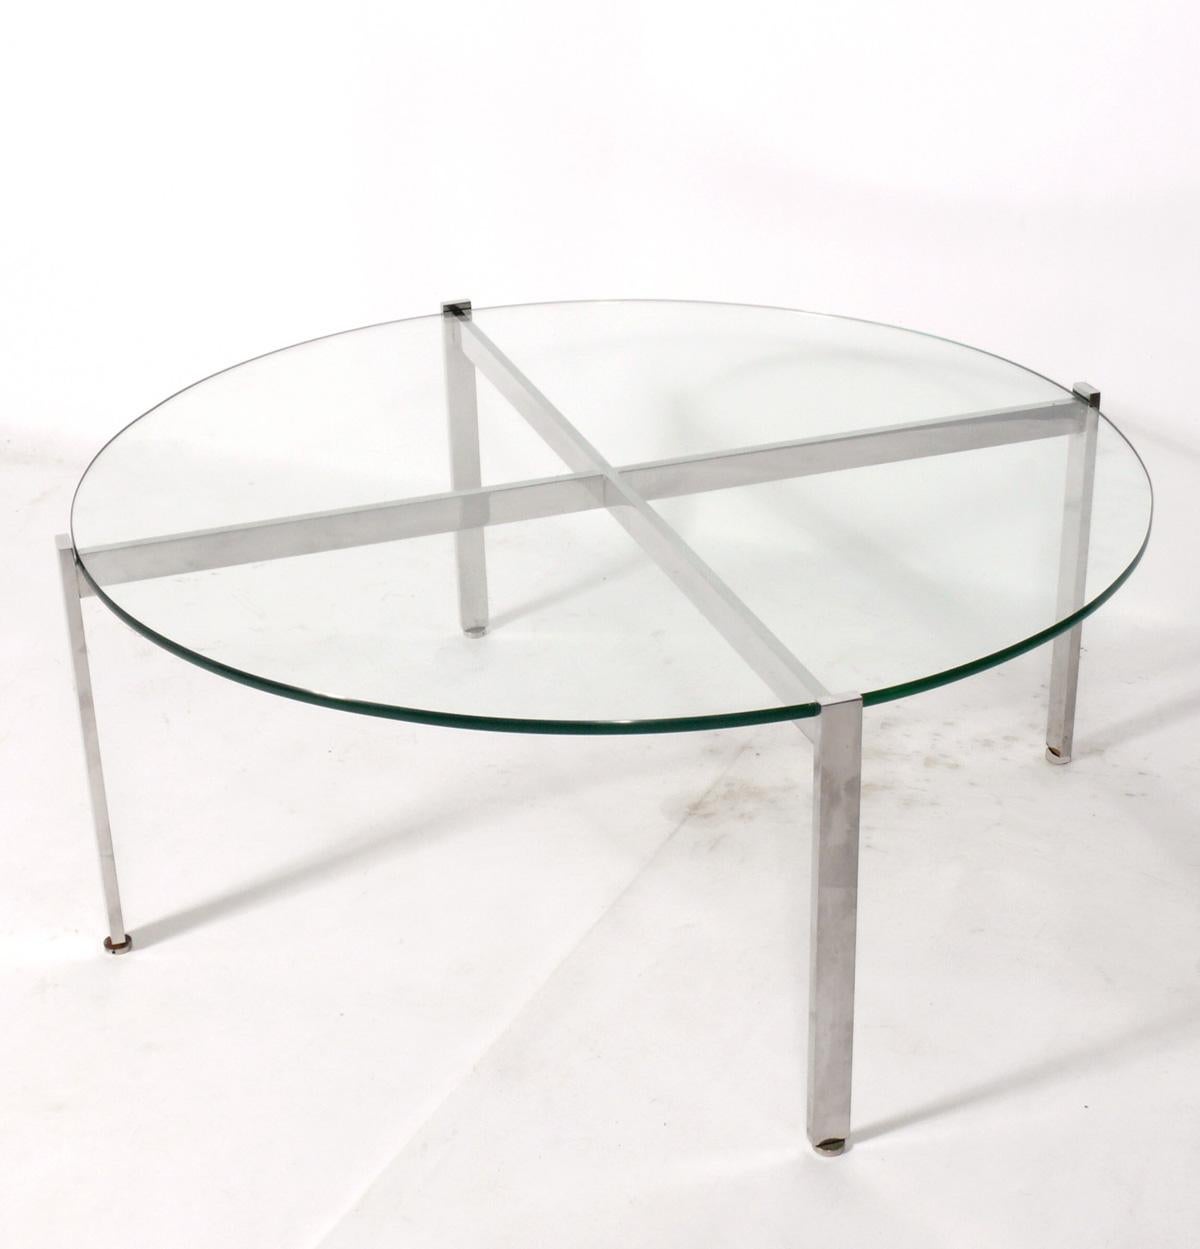 Sleek chrome X-base coffee table, designed by Nicos Zographos, circa 1960s.